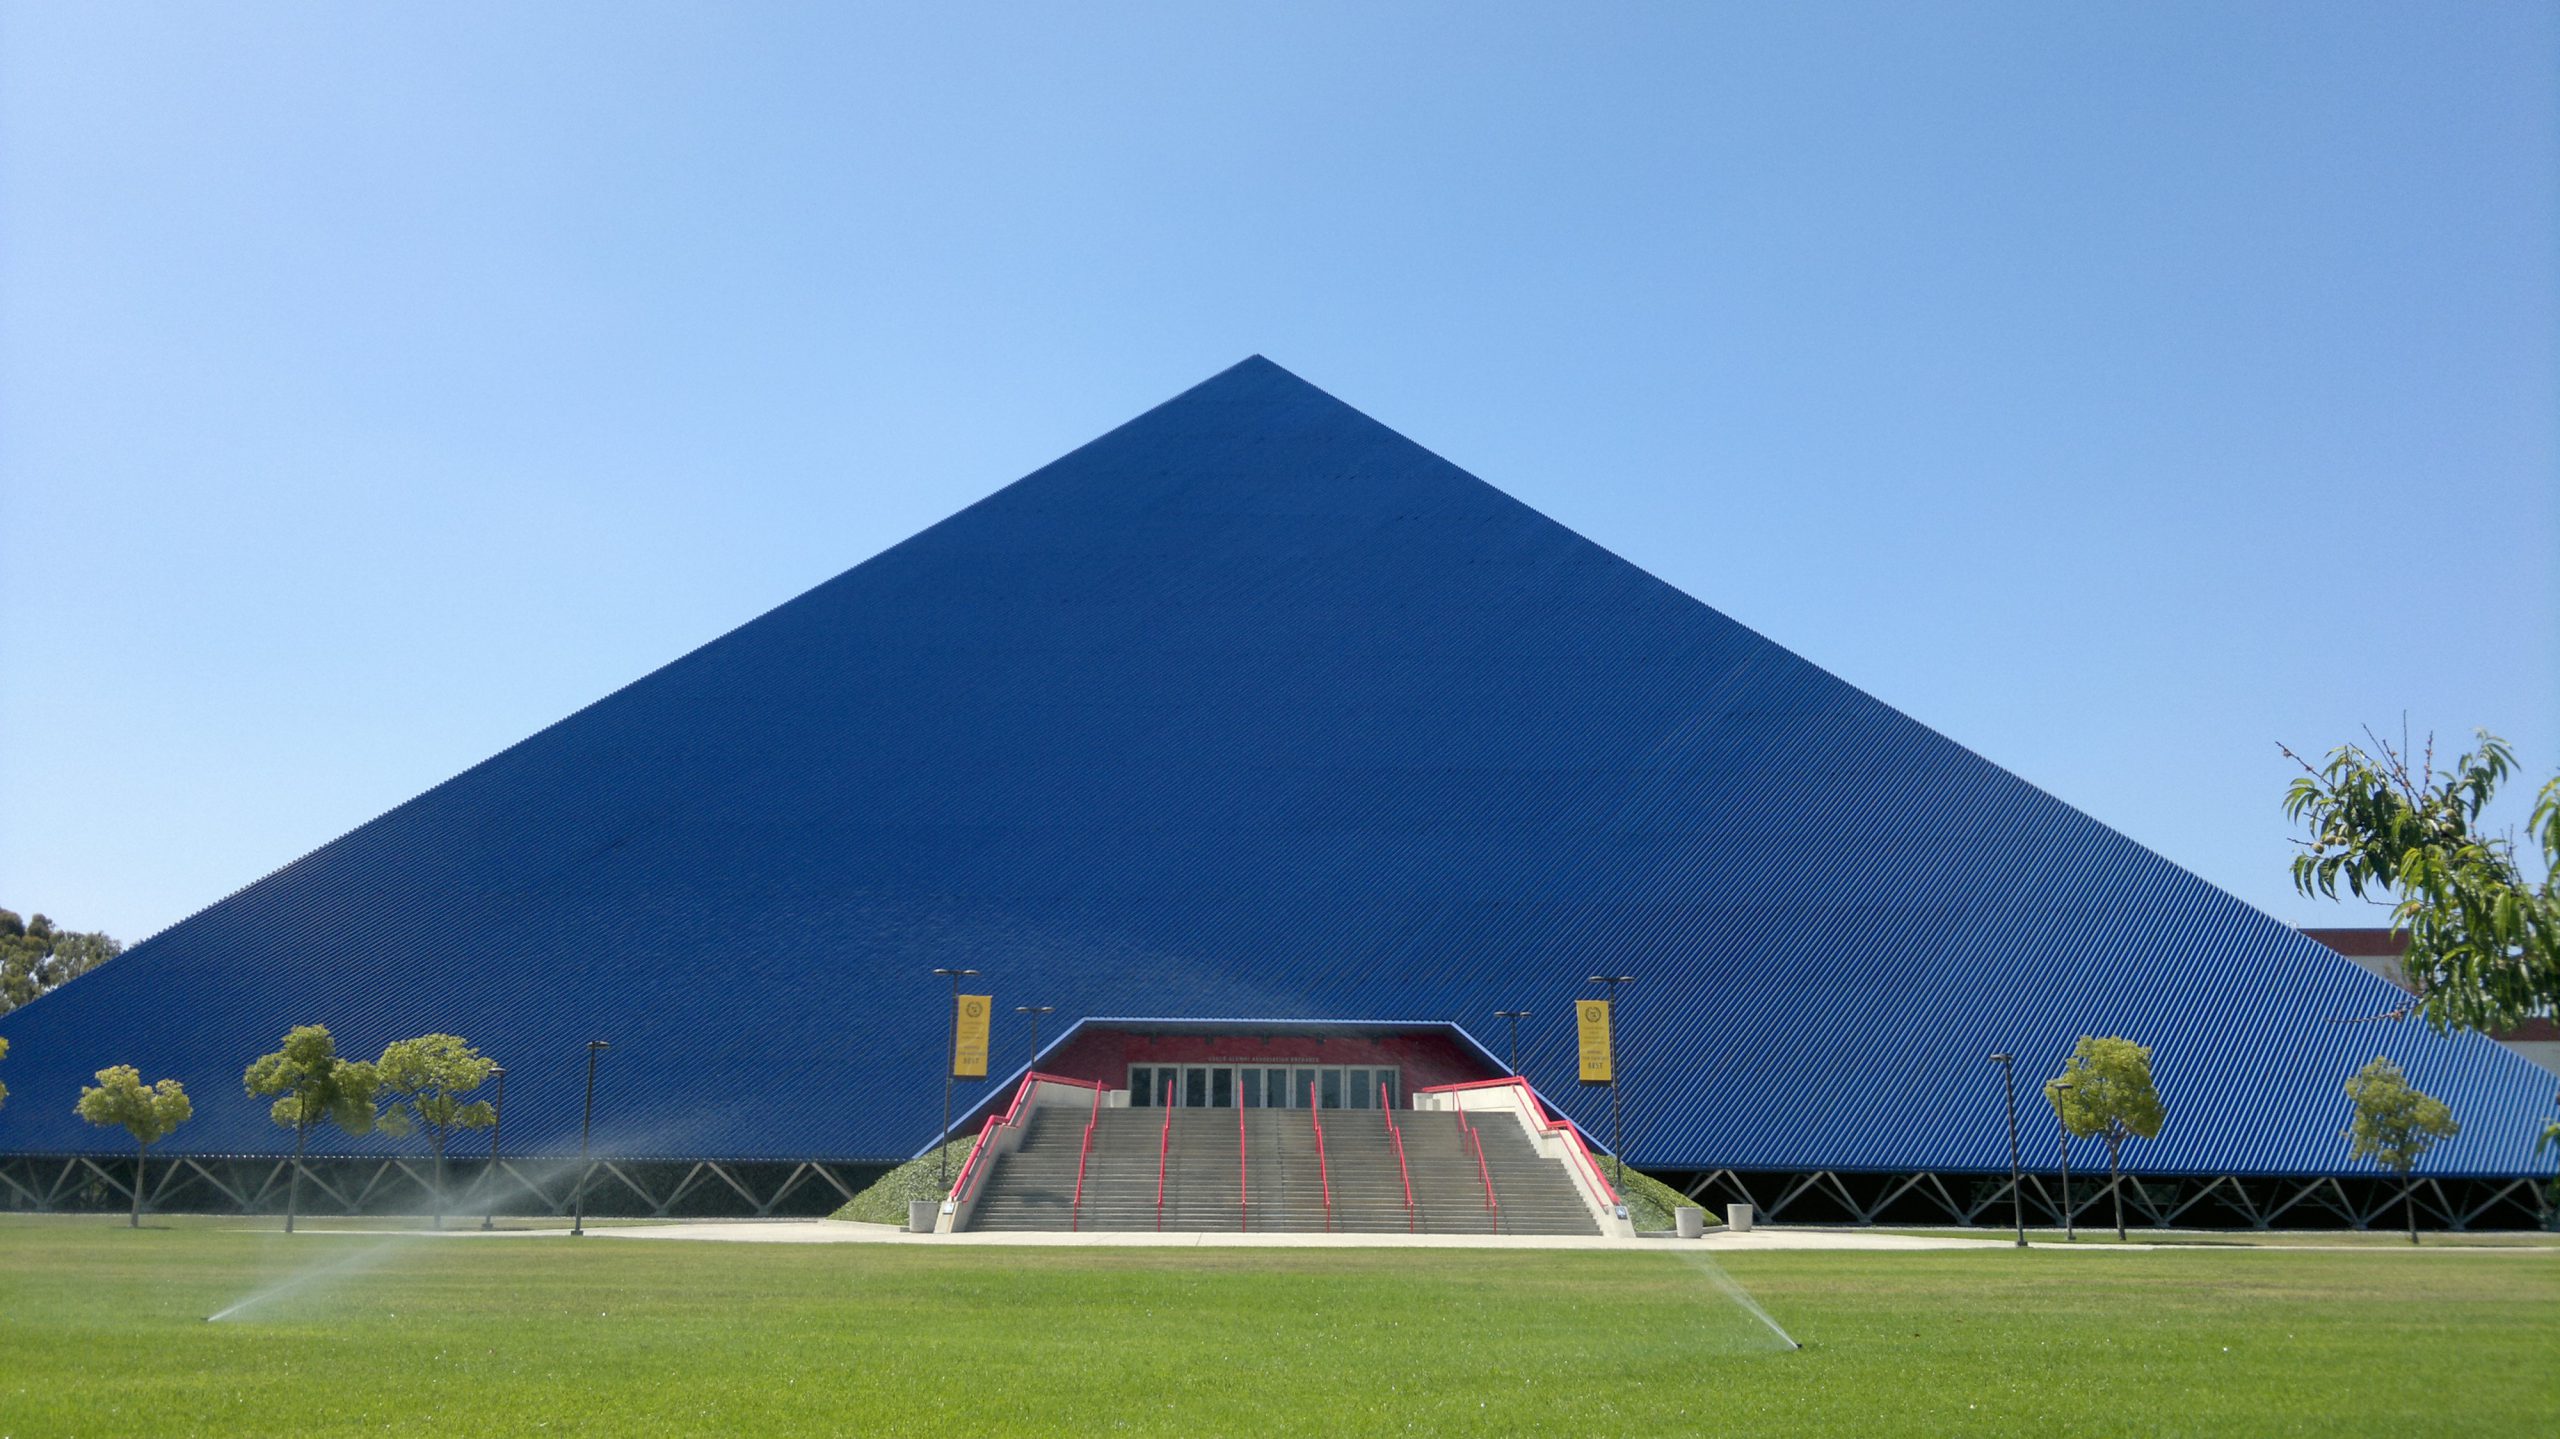 CSULB Pyramid